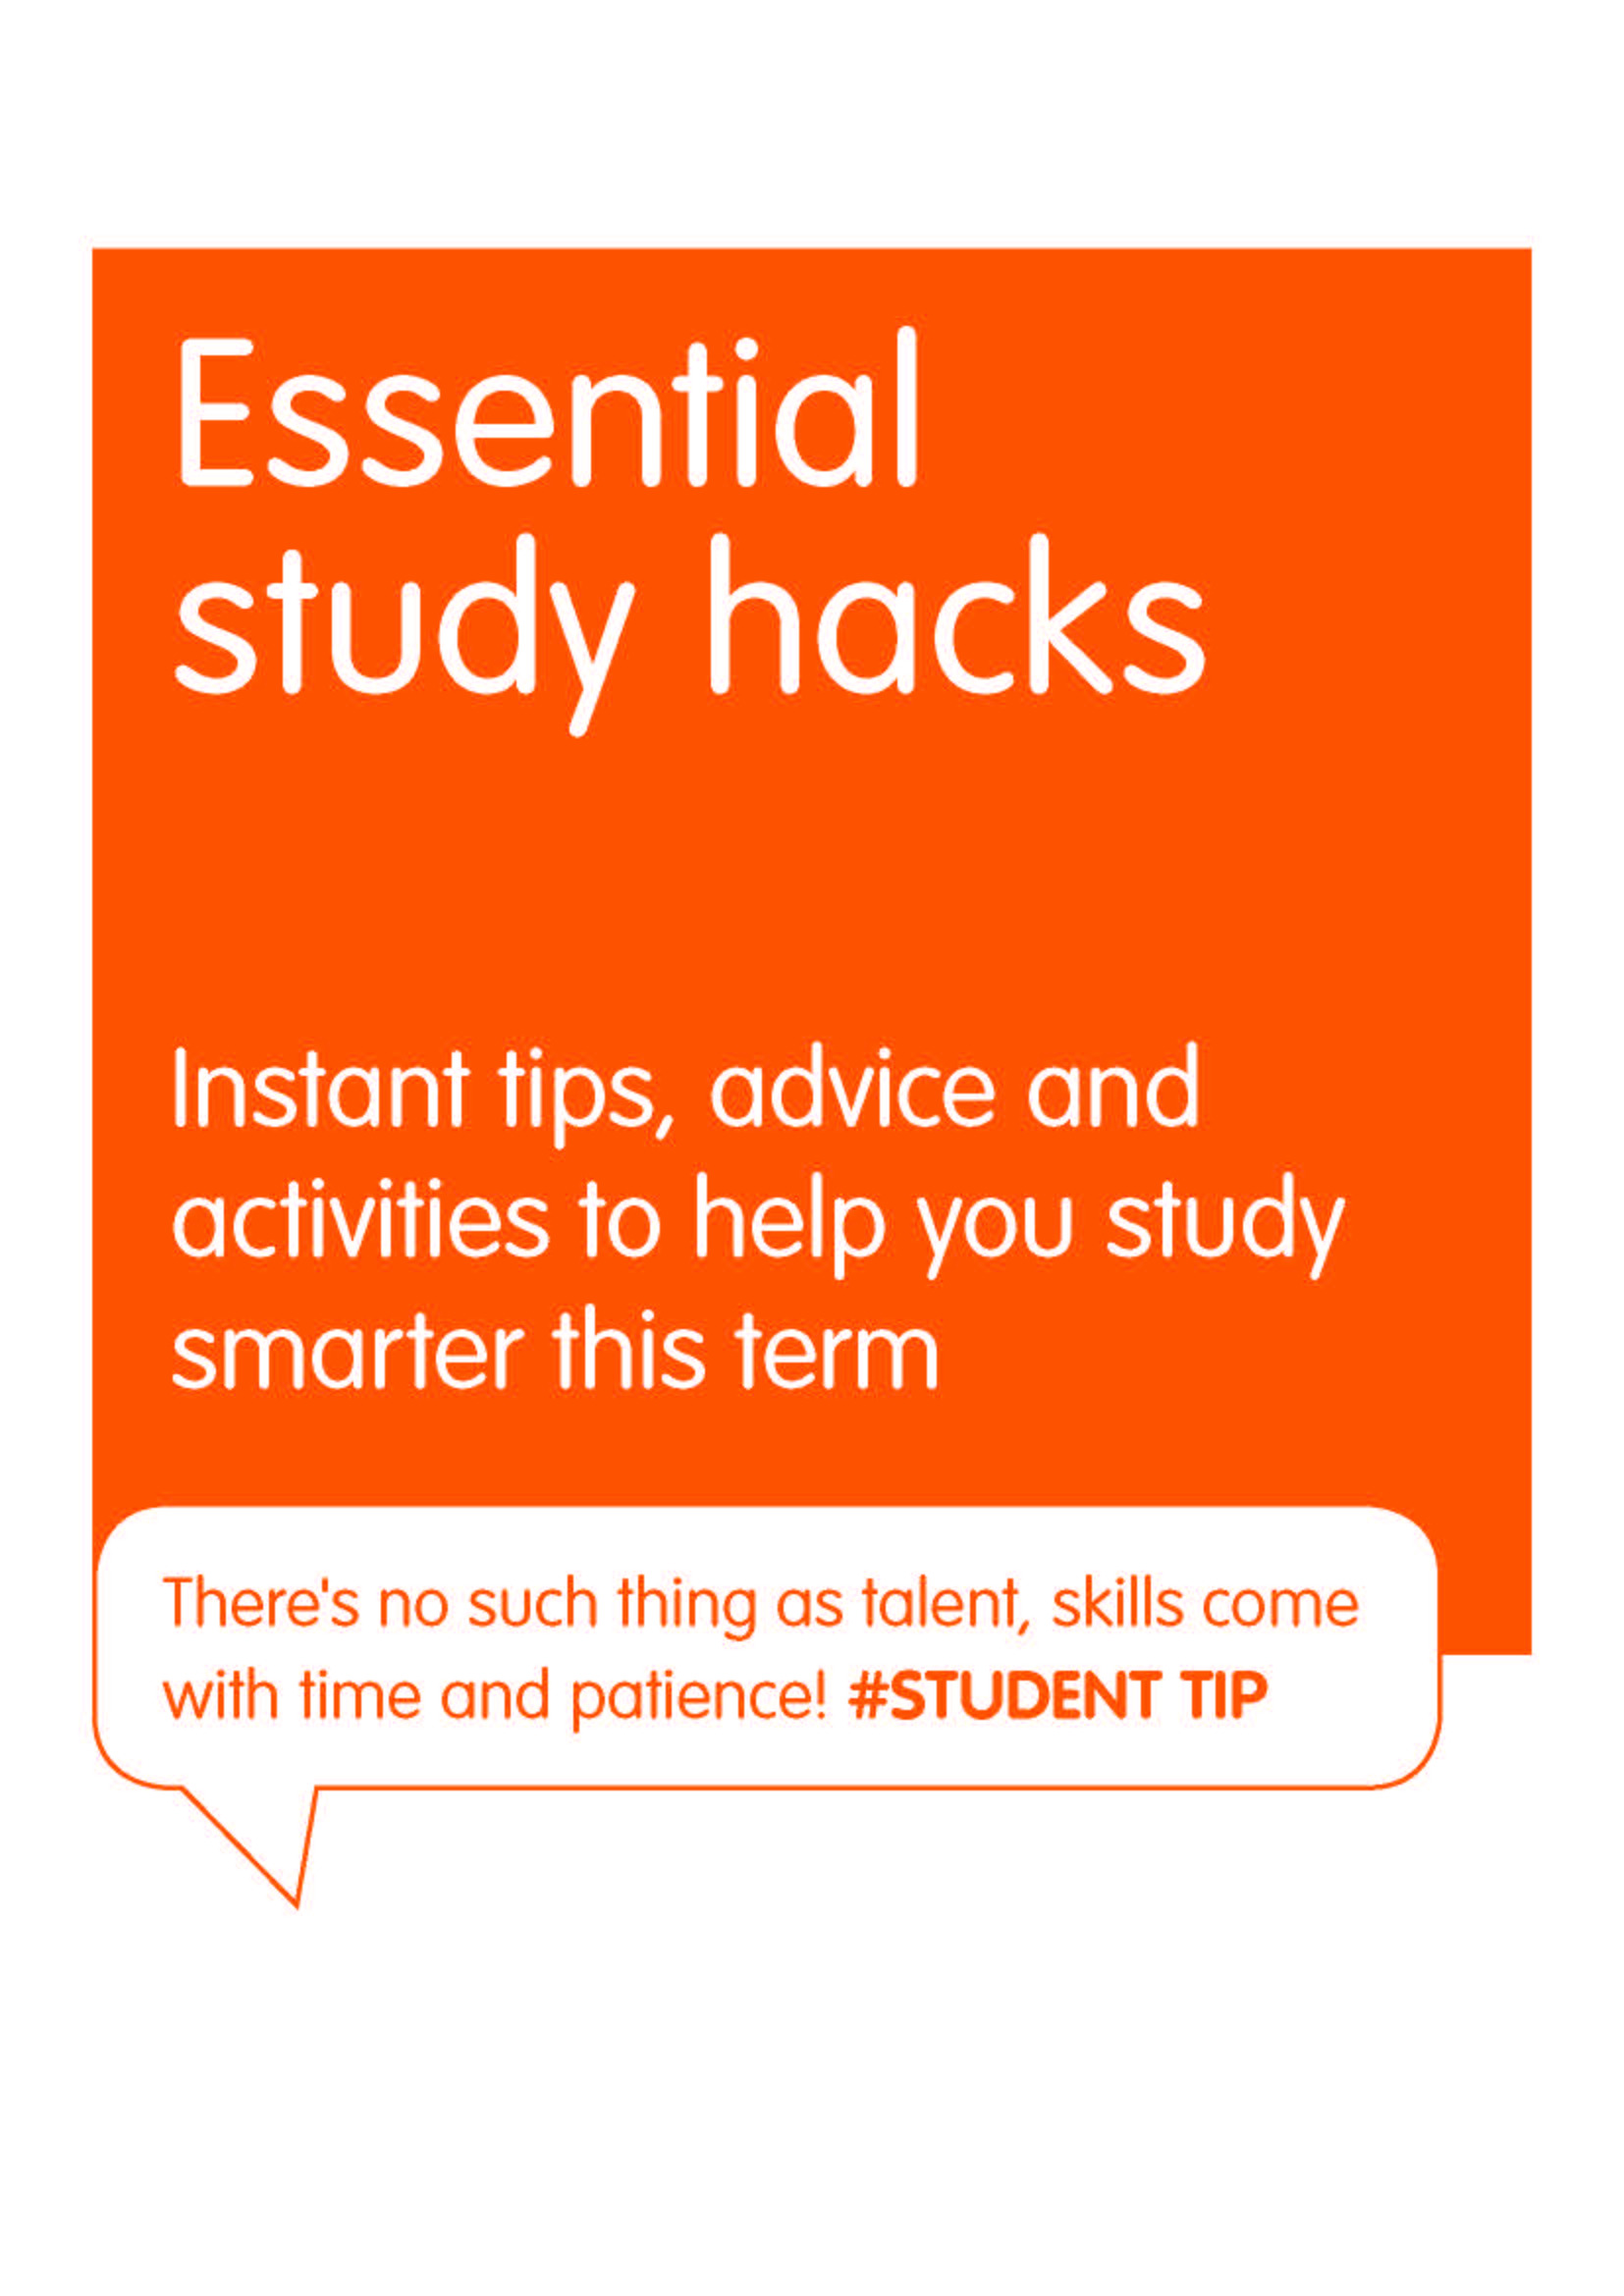 Download the free study hacks eBooks